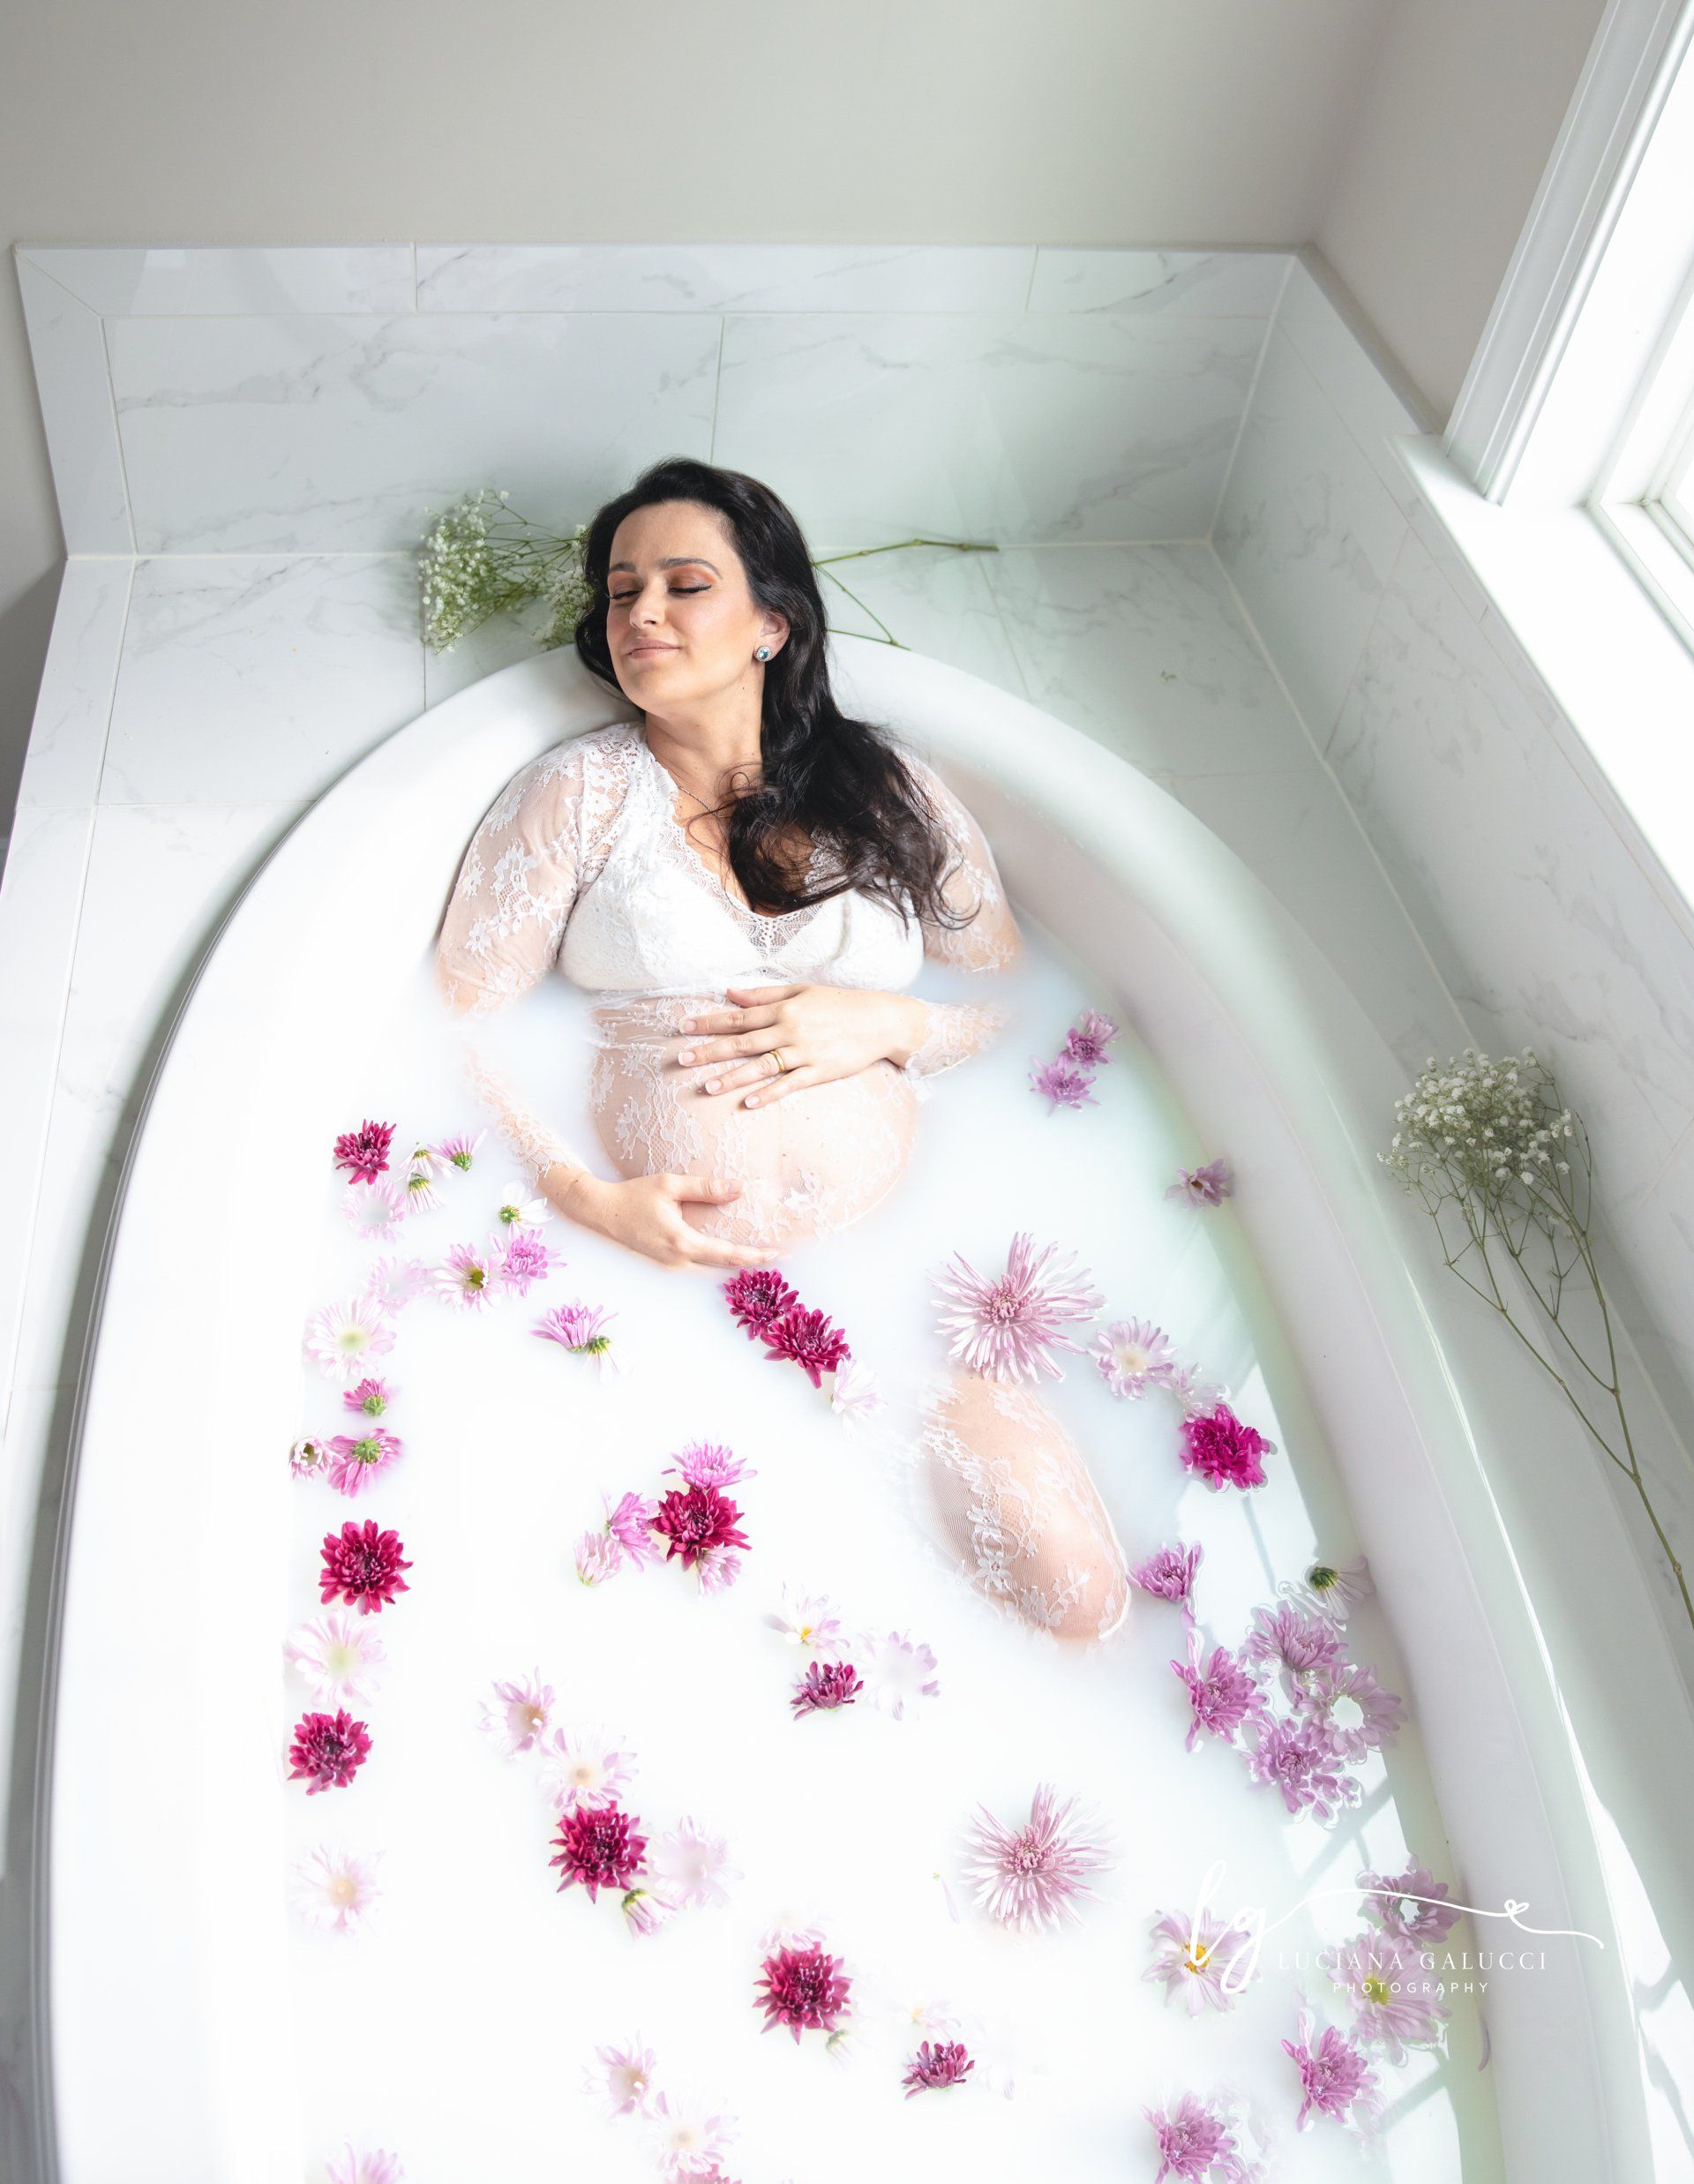 Milk Bath Photoshoot by Luciana Galucci Photography